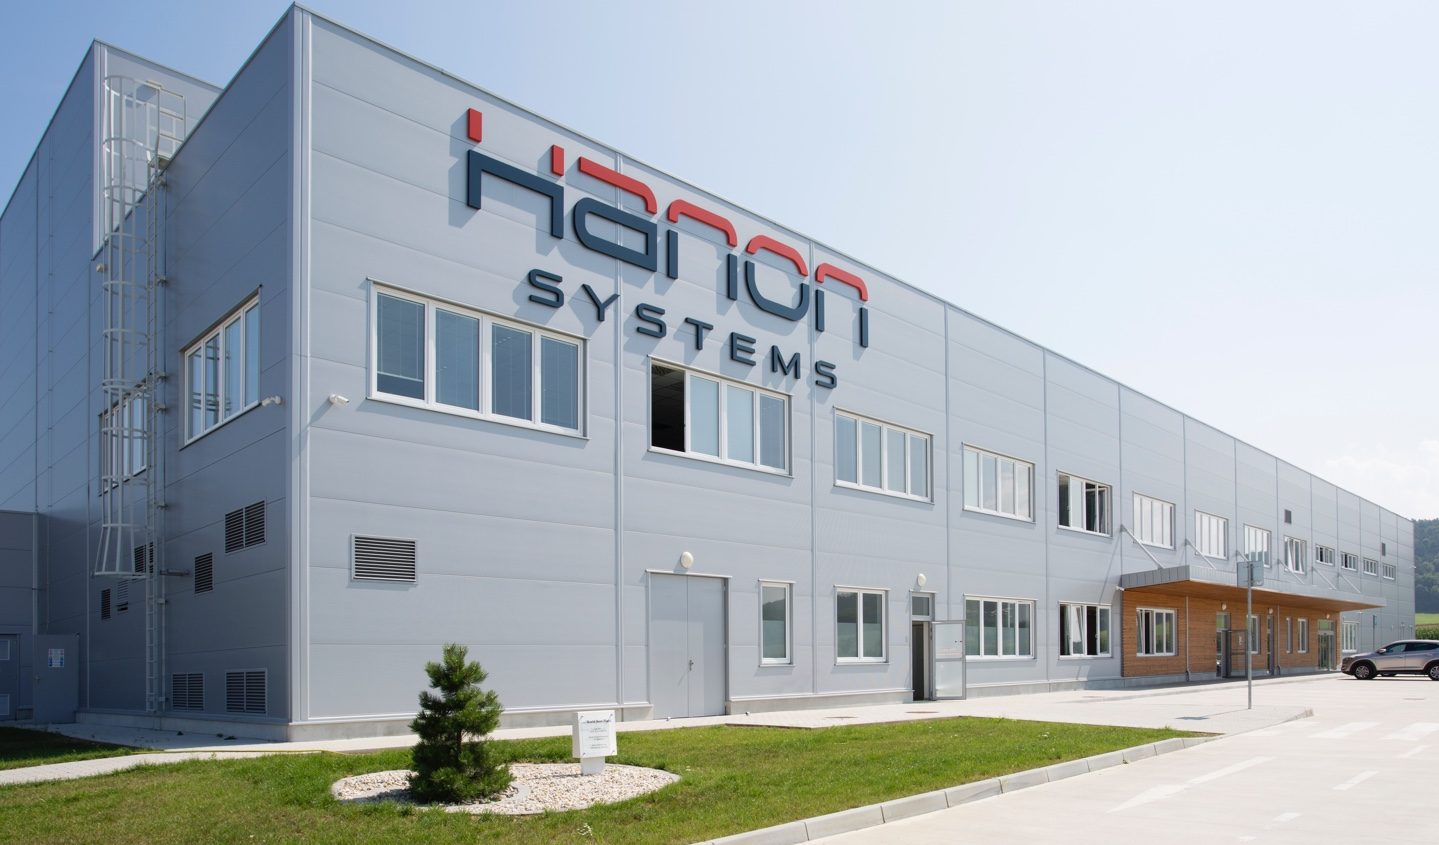 South Korean Hanon Systems Creates 250 New Jobs in Three Cities